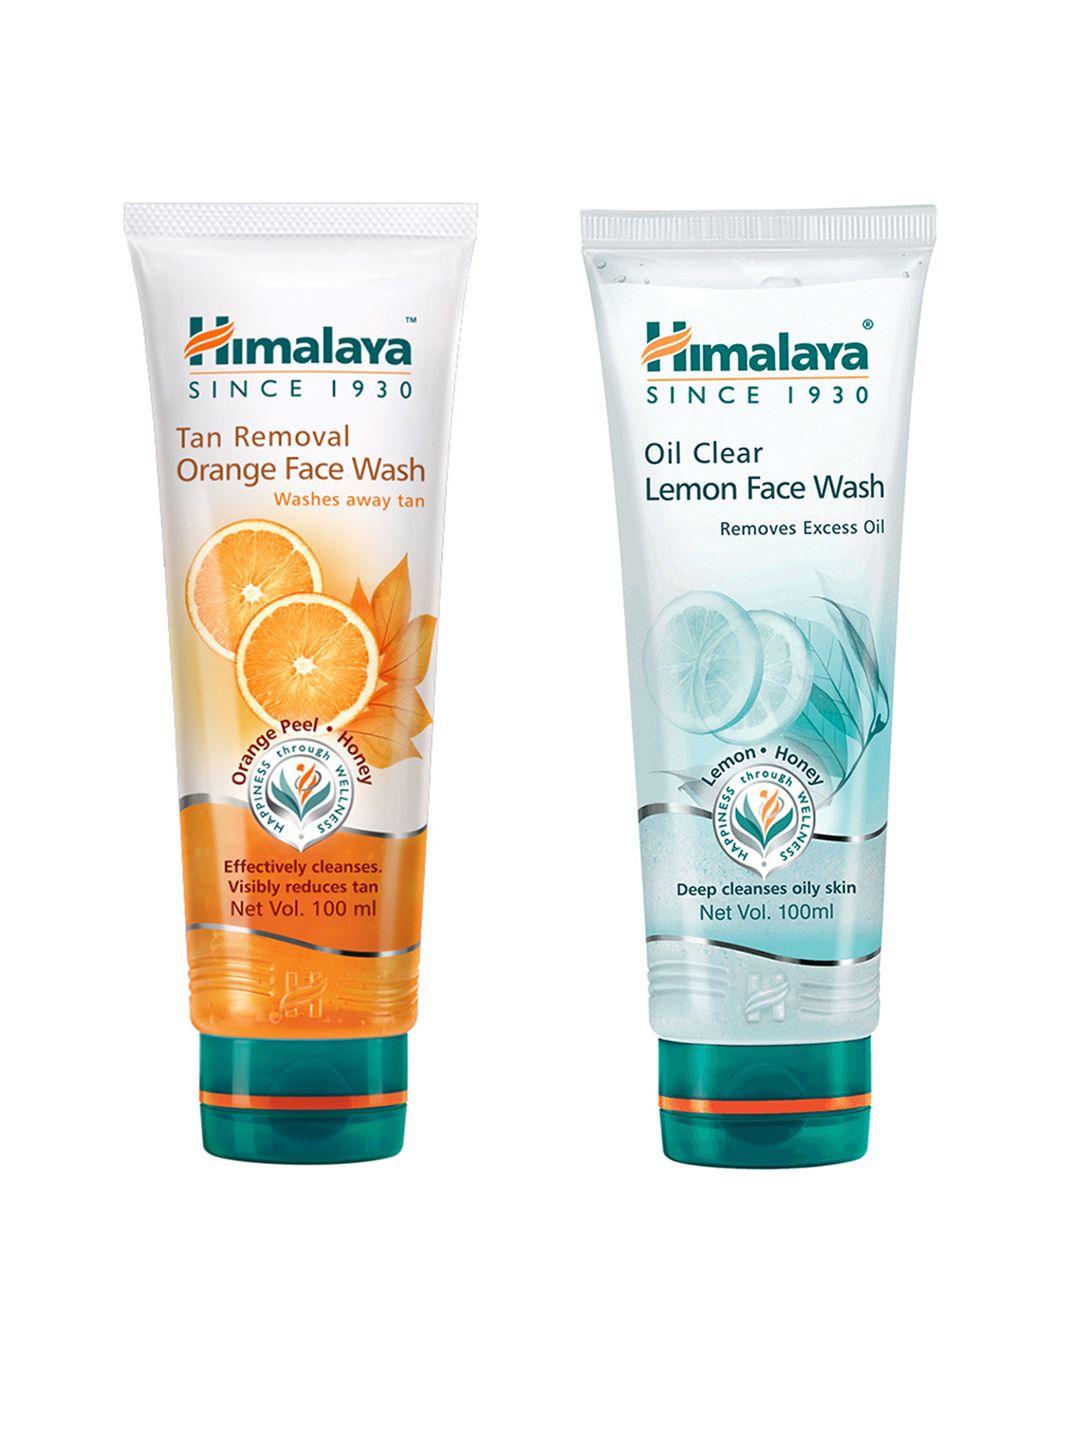 himalaya set of 2 face wash - oil clear lemon & tan removal orange - 100ml each